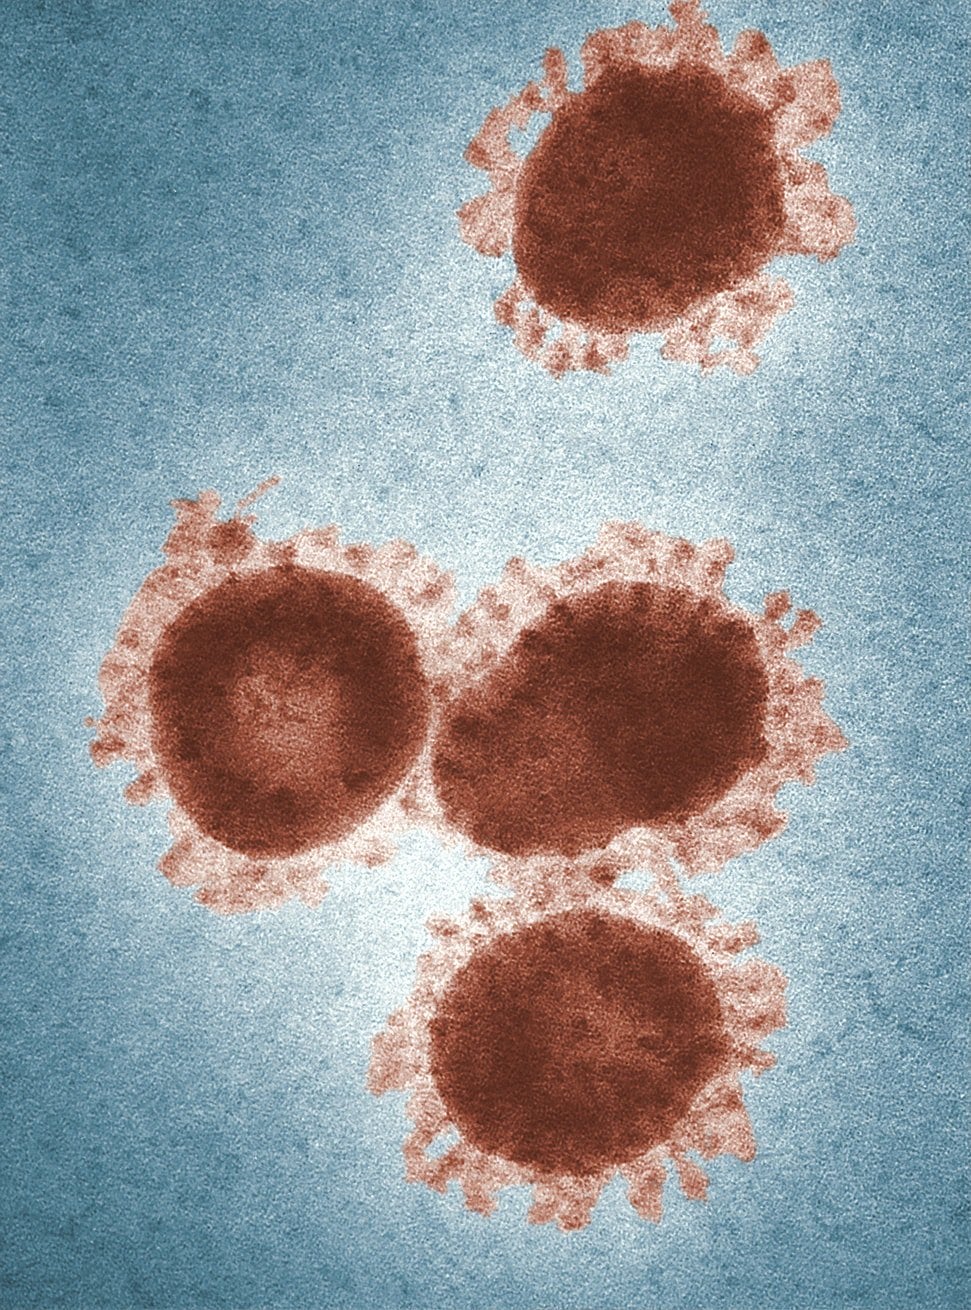 Coronavirus teal and orange